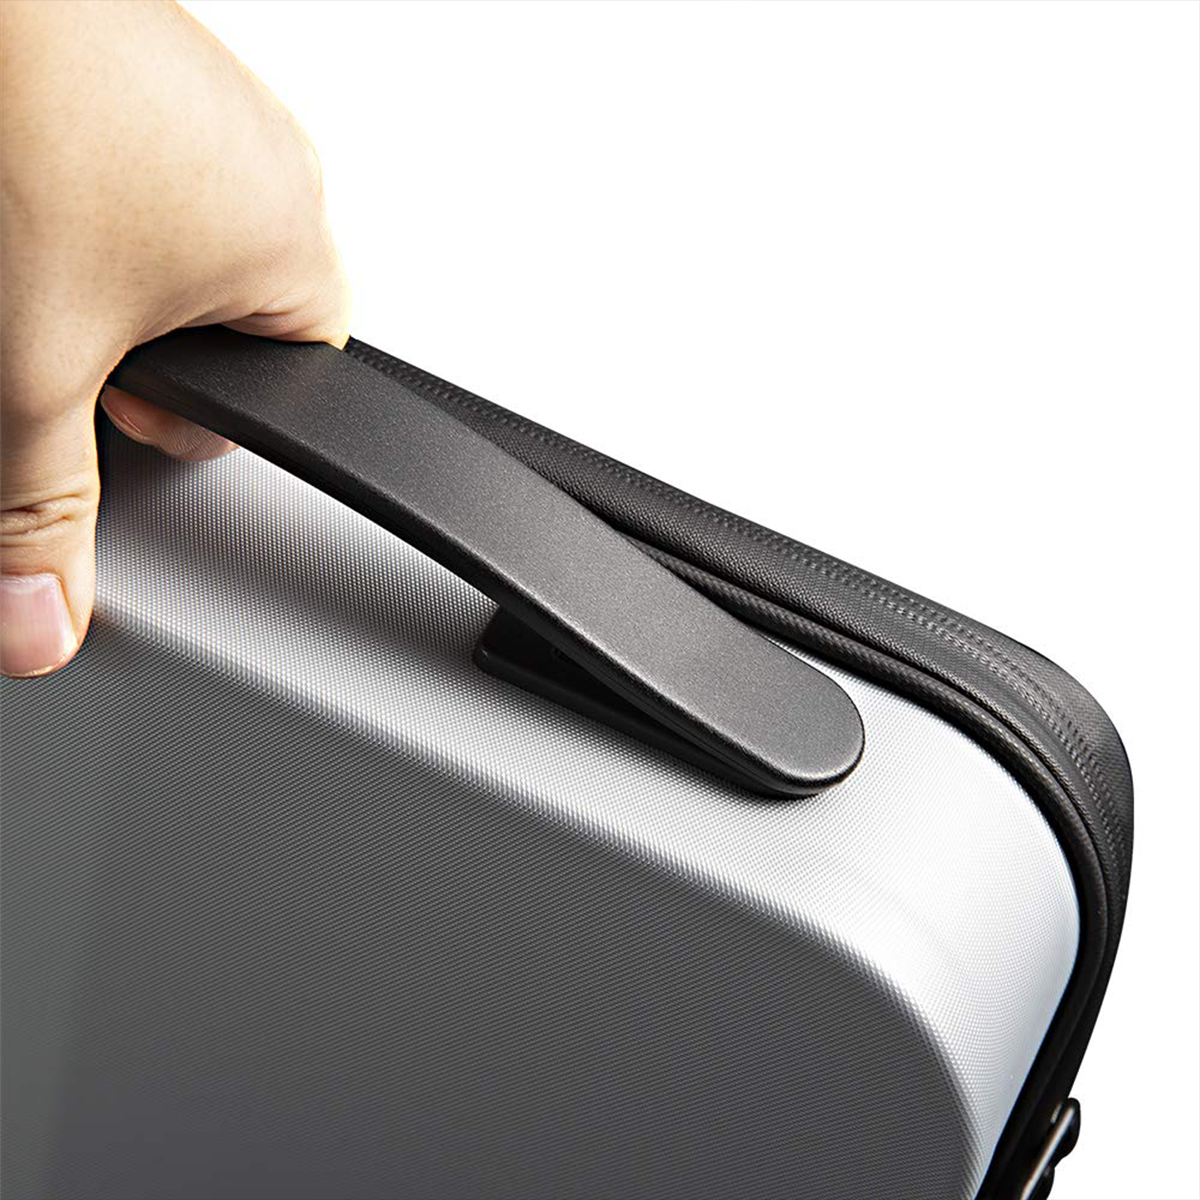 Leather Briefcase | Laptop Bag Real Genuine Full Grain | Saddleback